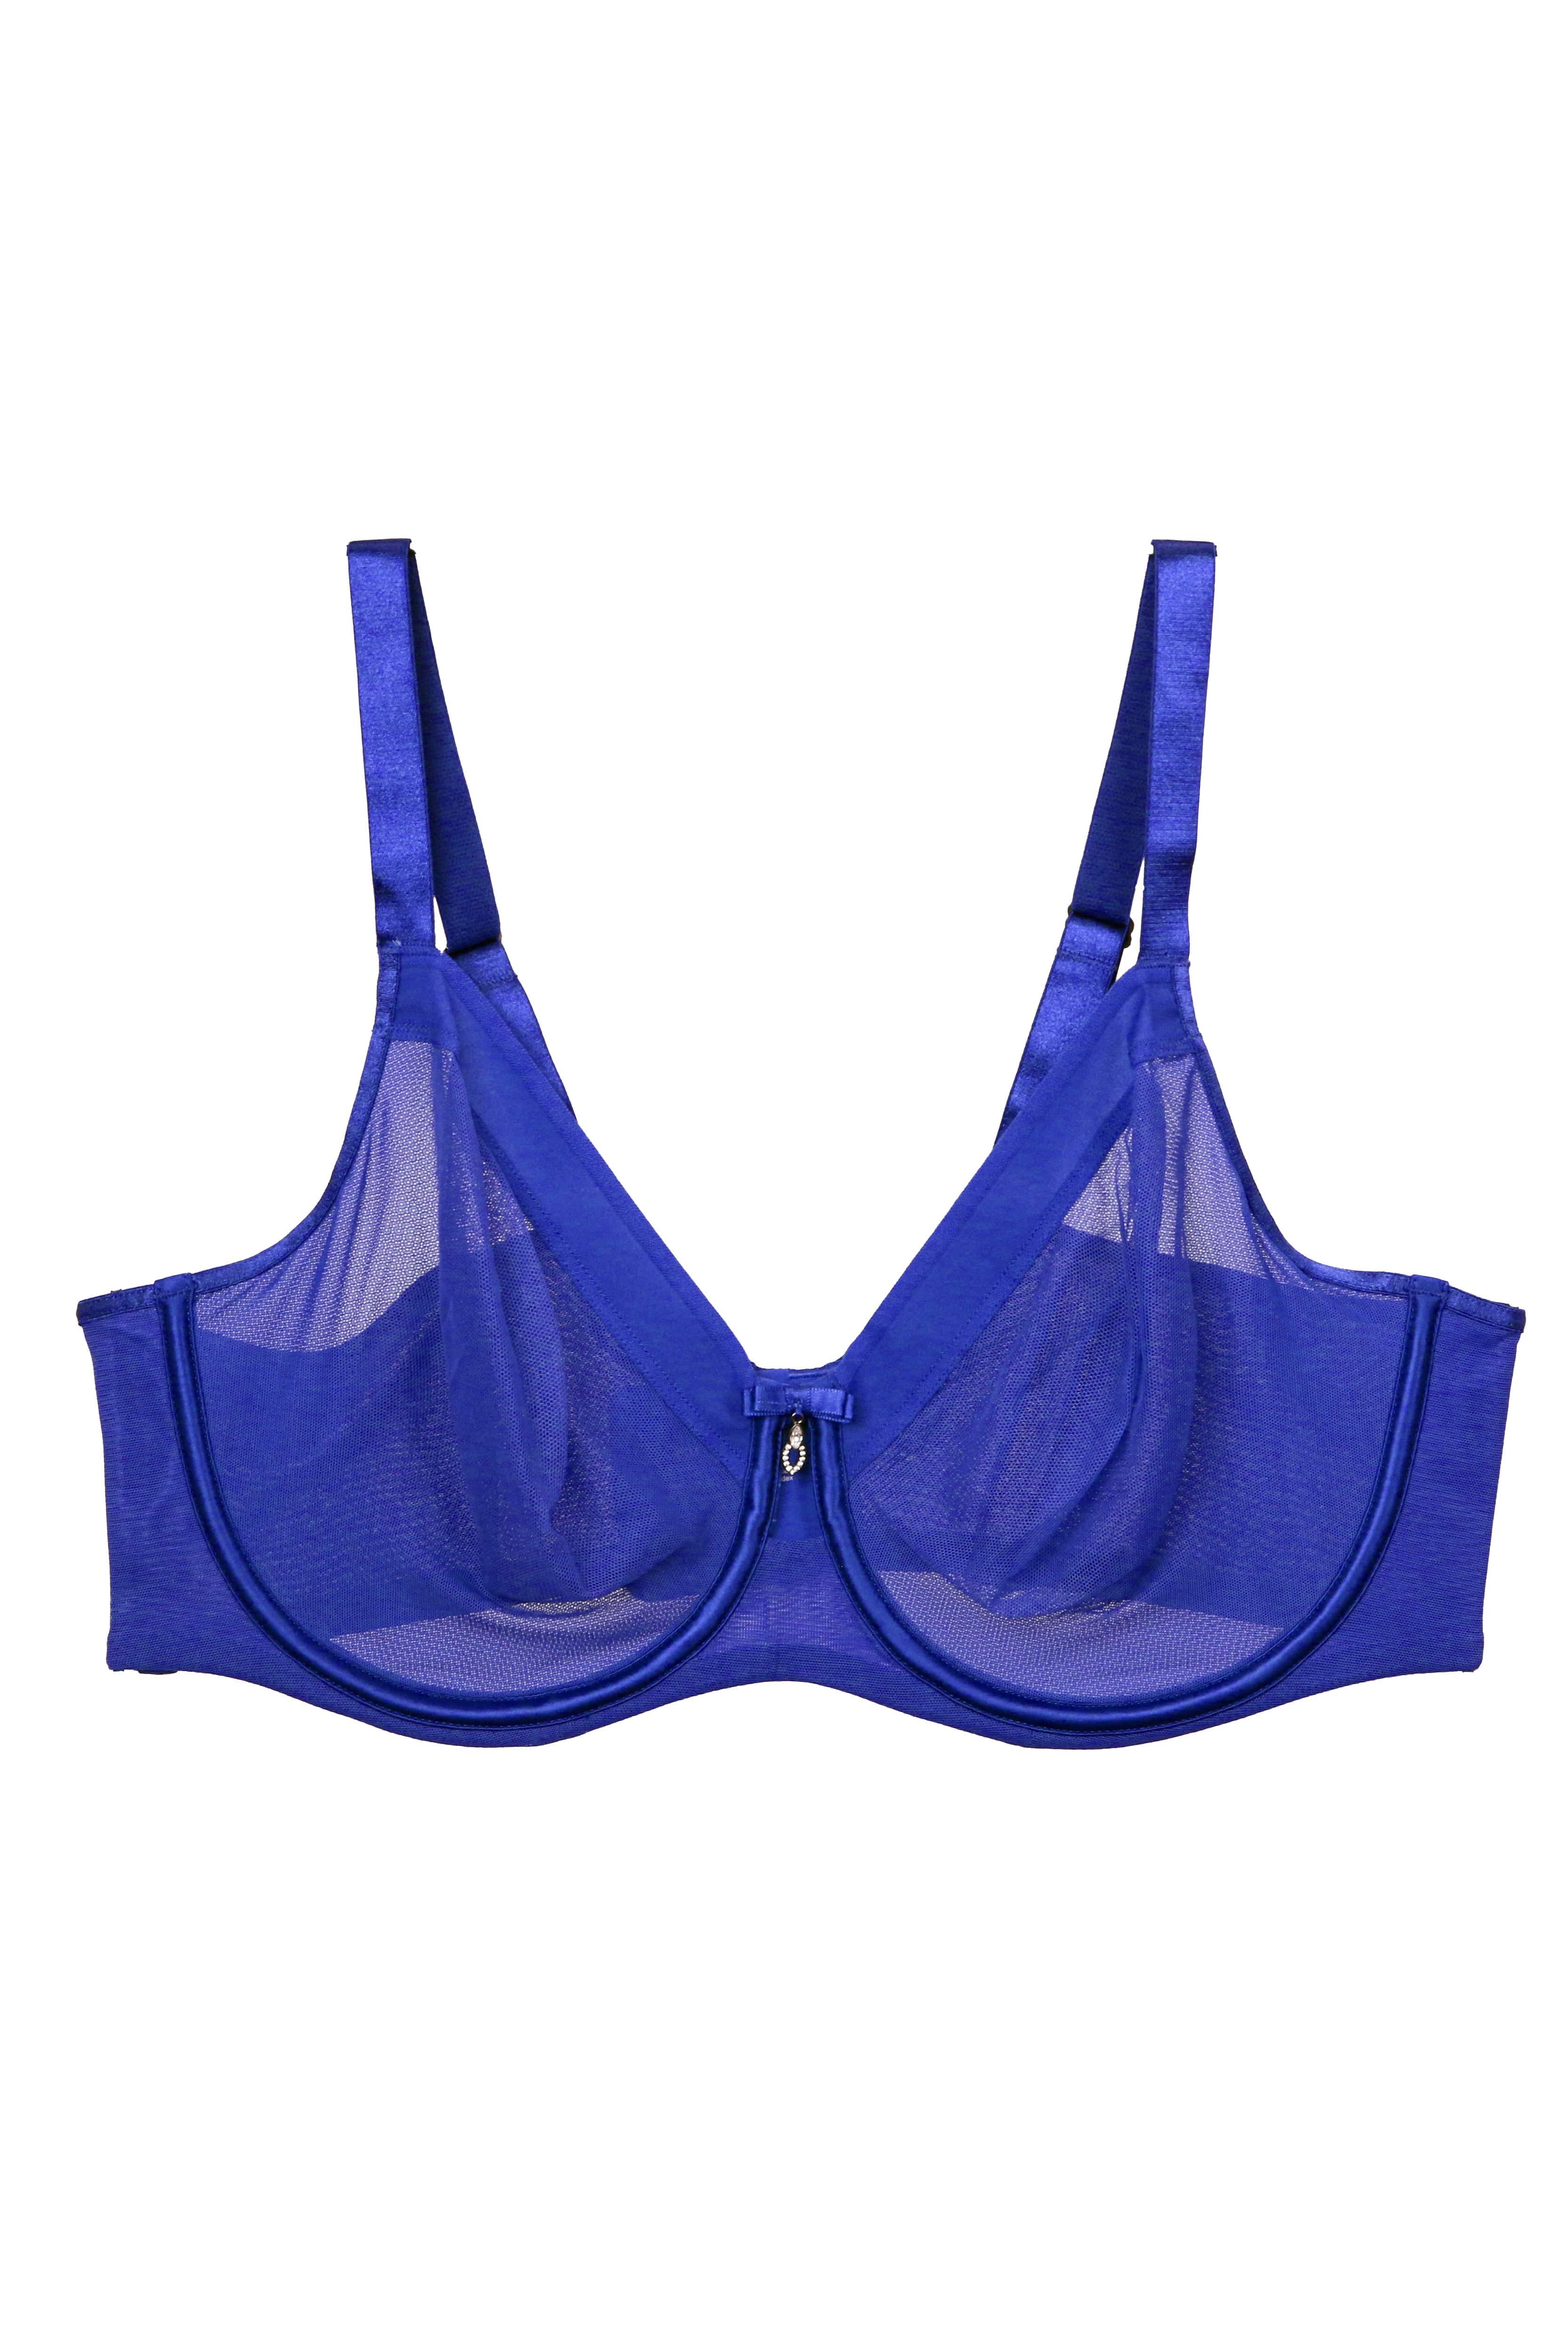 Paramour Women's Peridot Unlined Lace Bra - Periwinkle Blue 40g